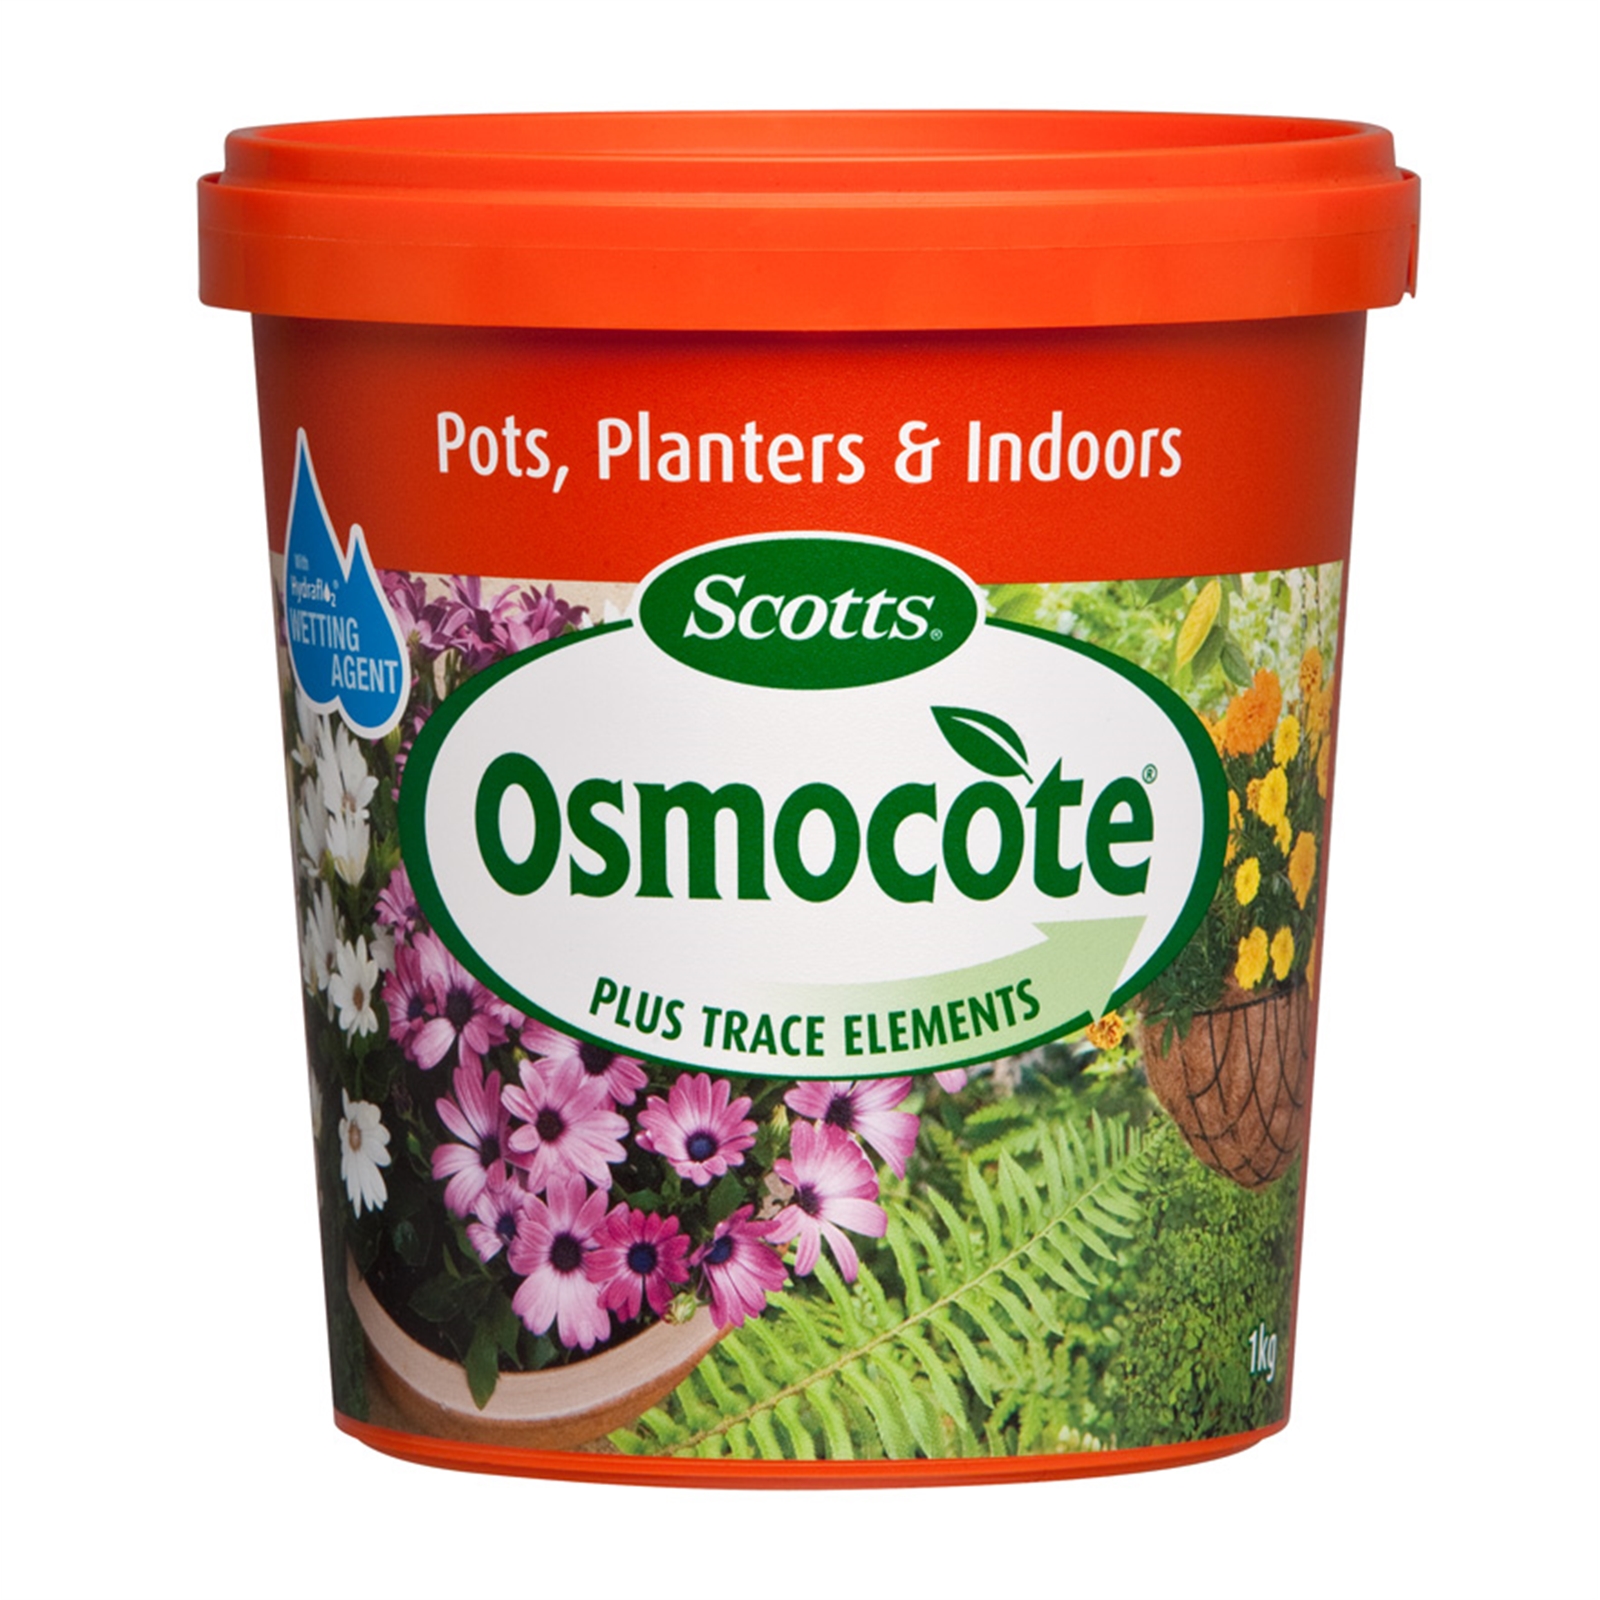 Osmocote 1kg Pots Planters And Indoors Controlled Release Fertiliser